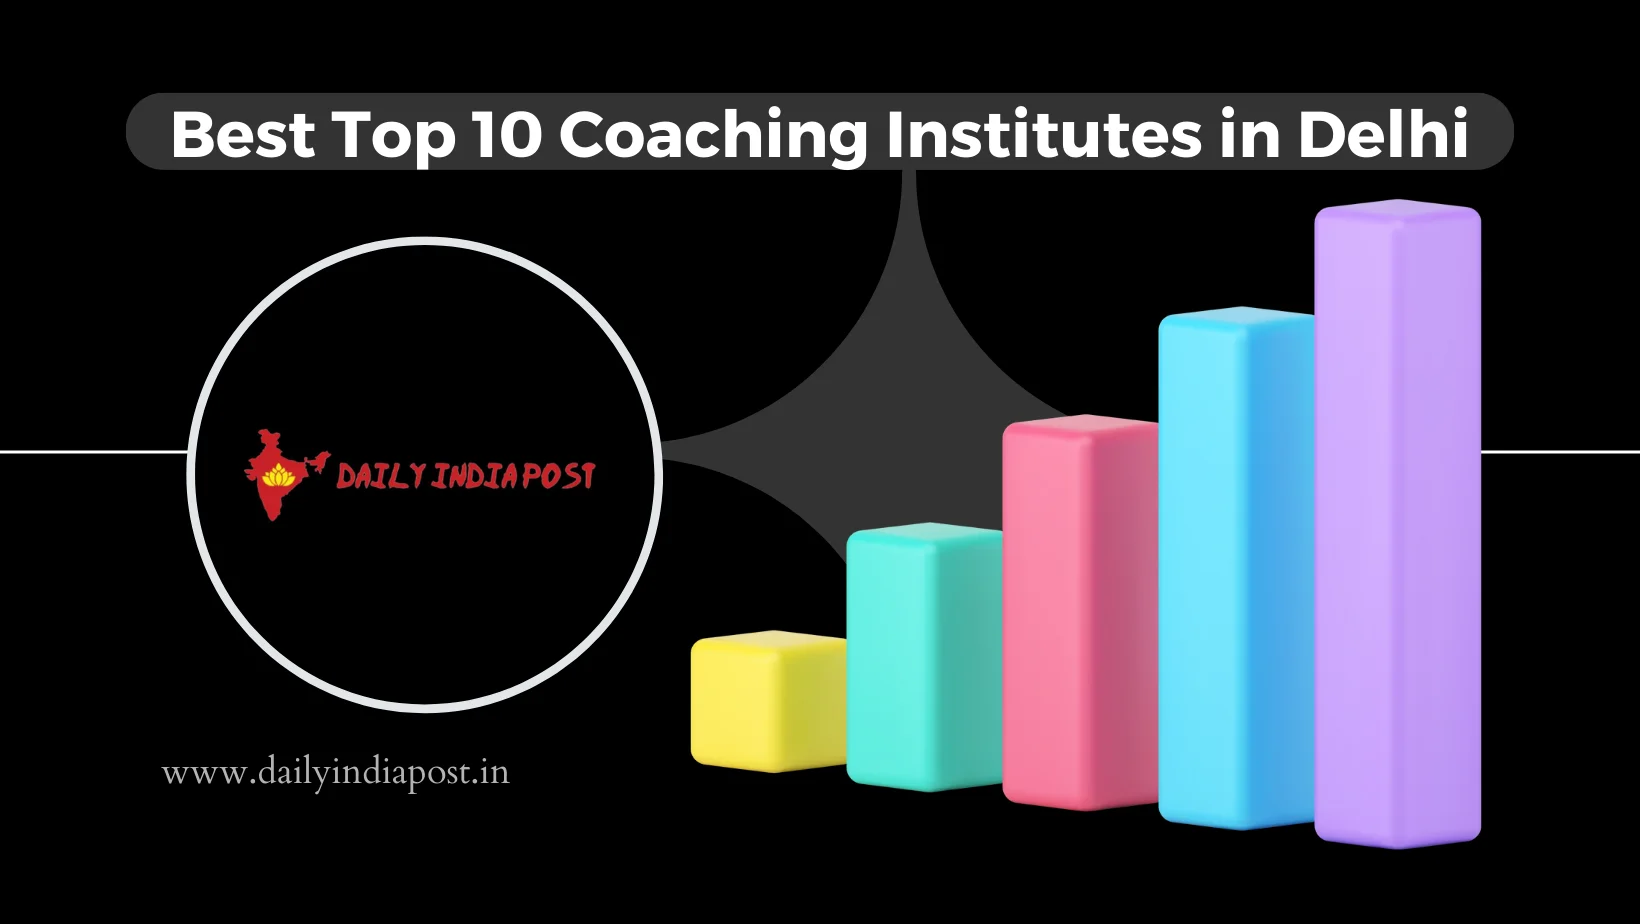 Best Top 10 Coaching Institutes in Delhi